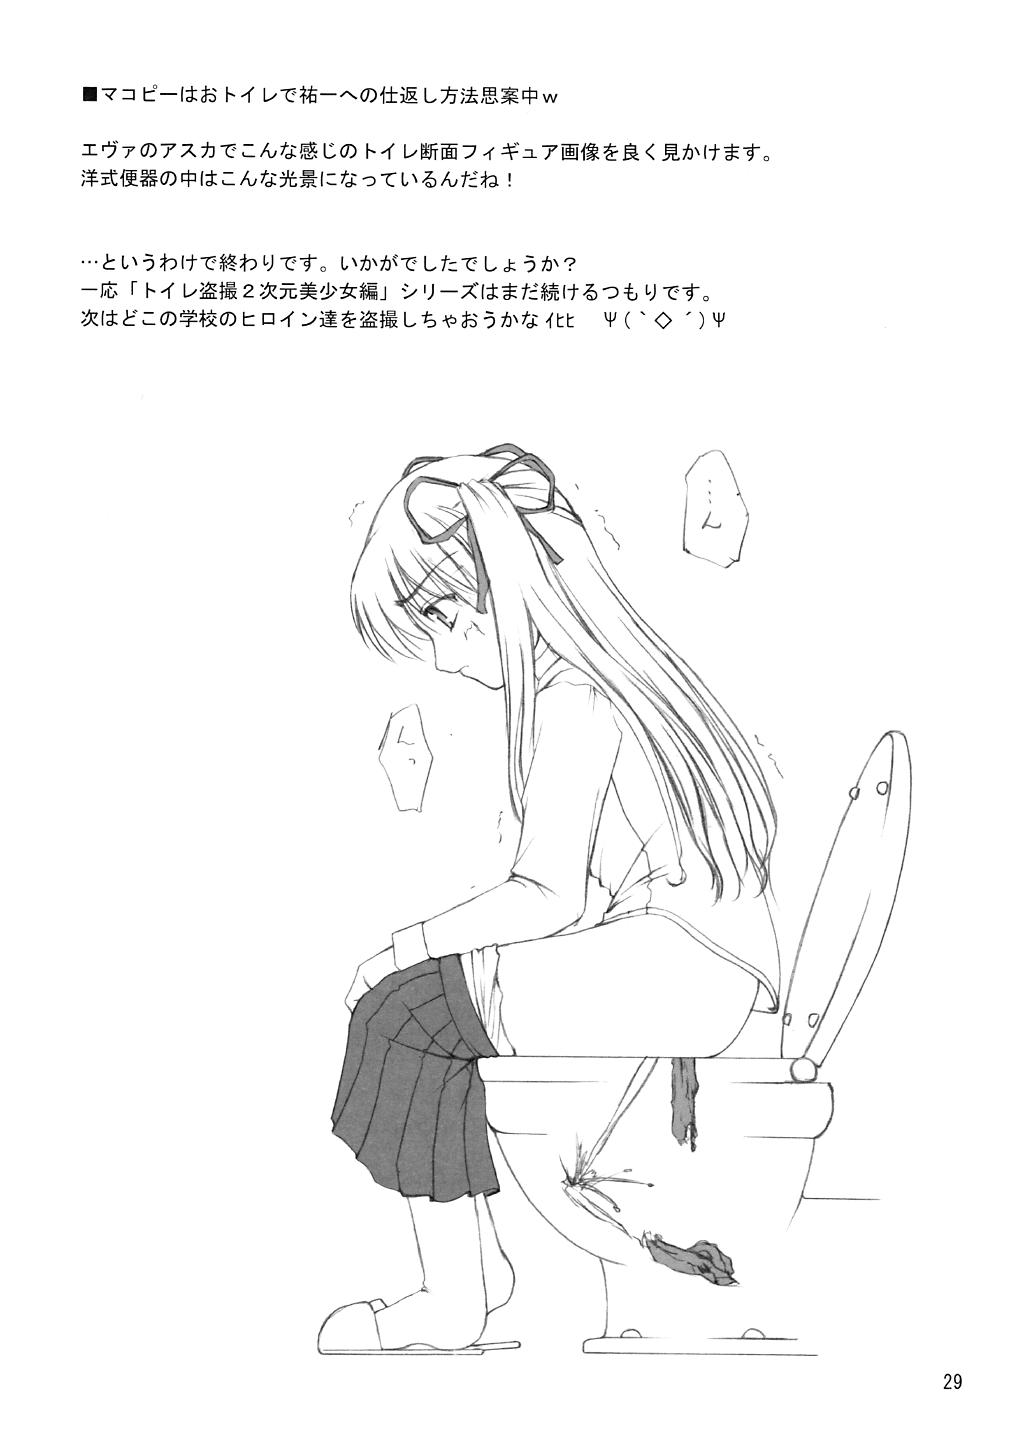 [Juicy Fruits] EX 6 Toilet peeping at 2D-girls (Vol.2 Kanon version) 某有名○校女子トイレ盗撮2次元美少女編 Vol.2